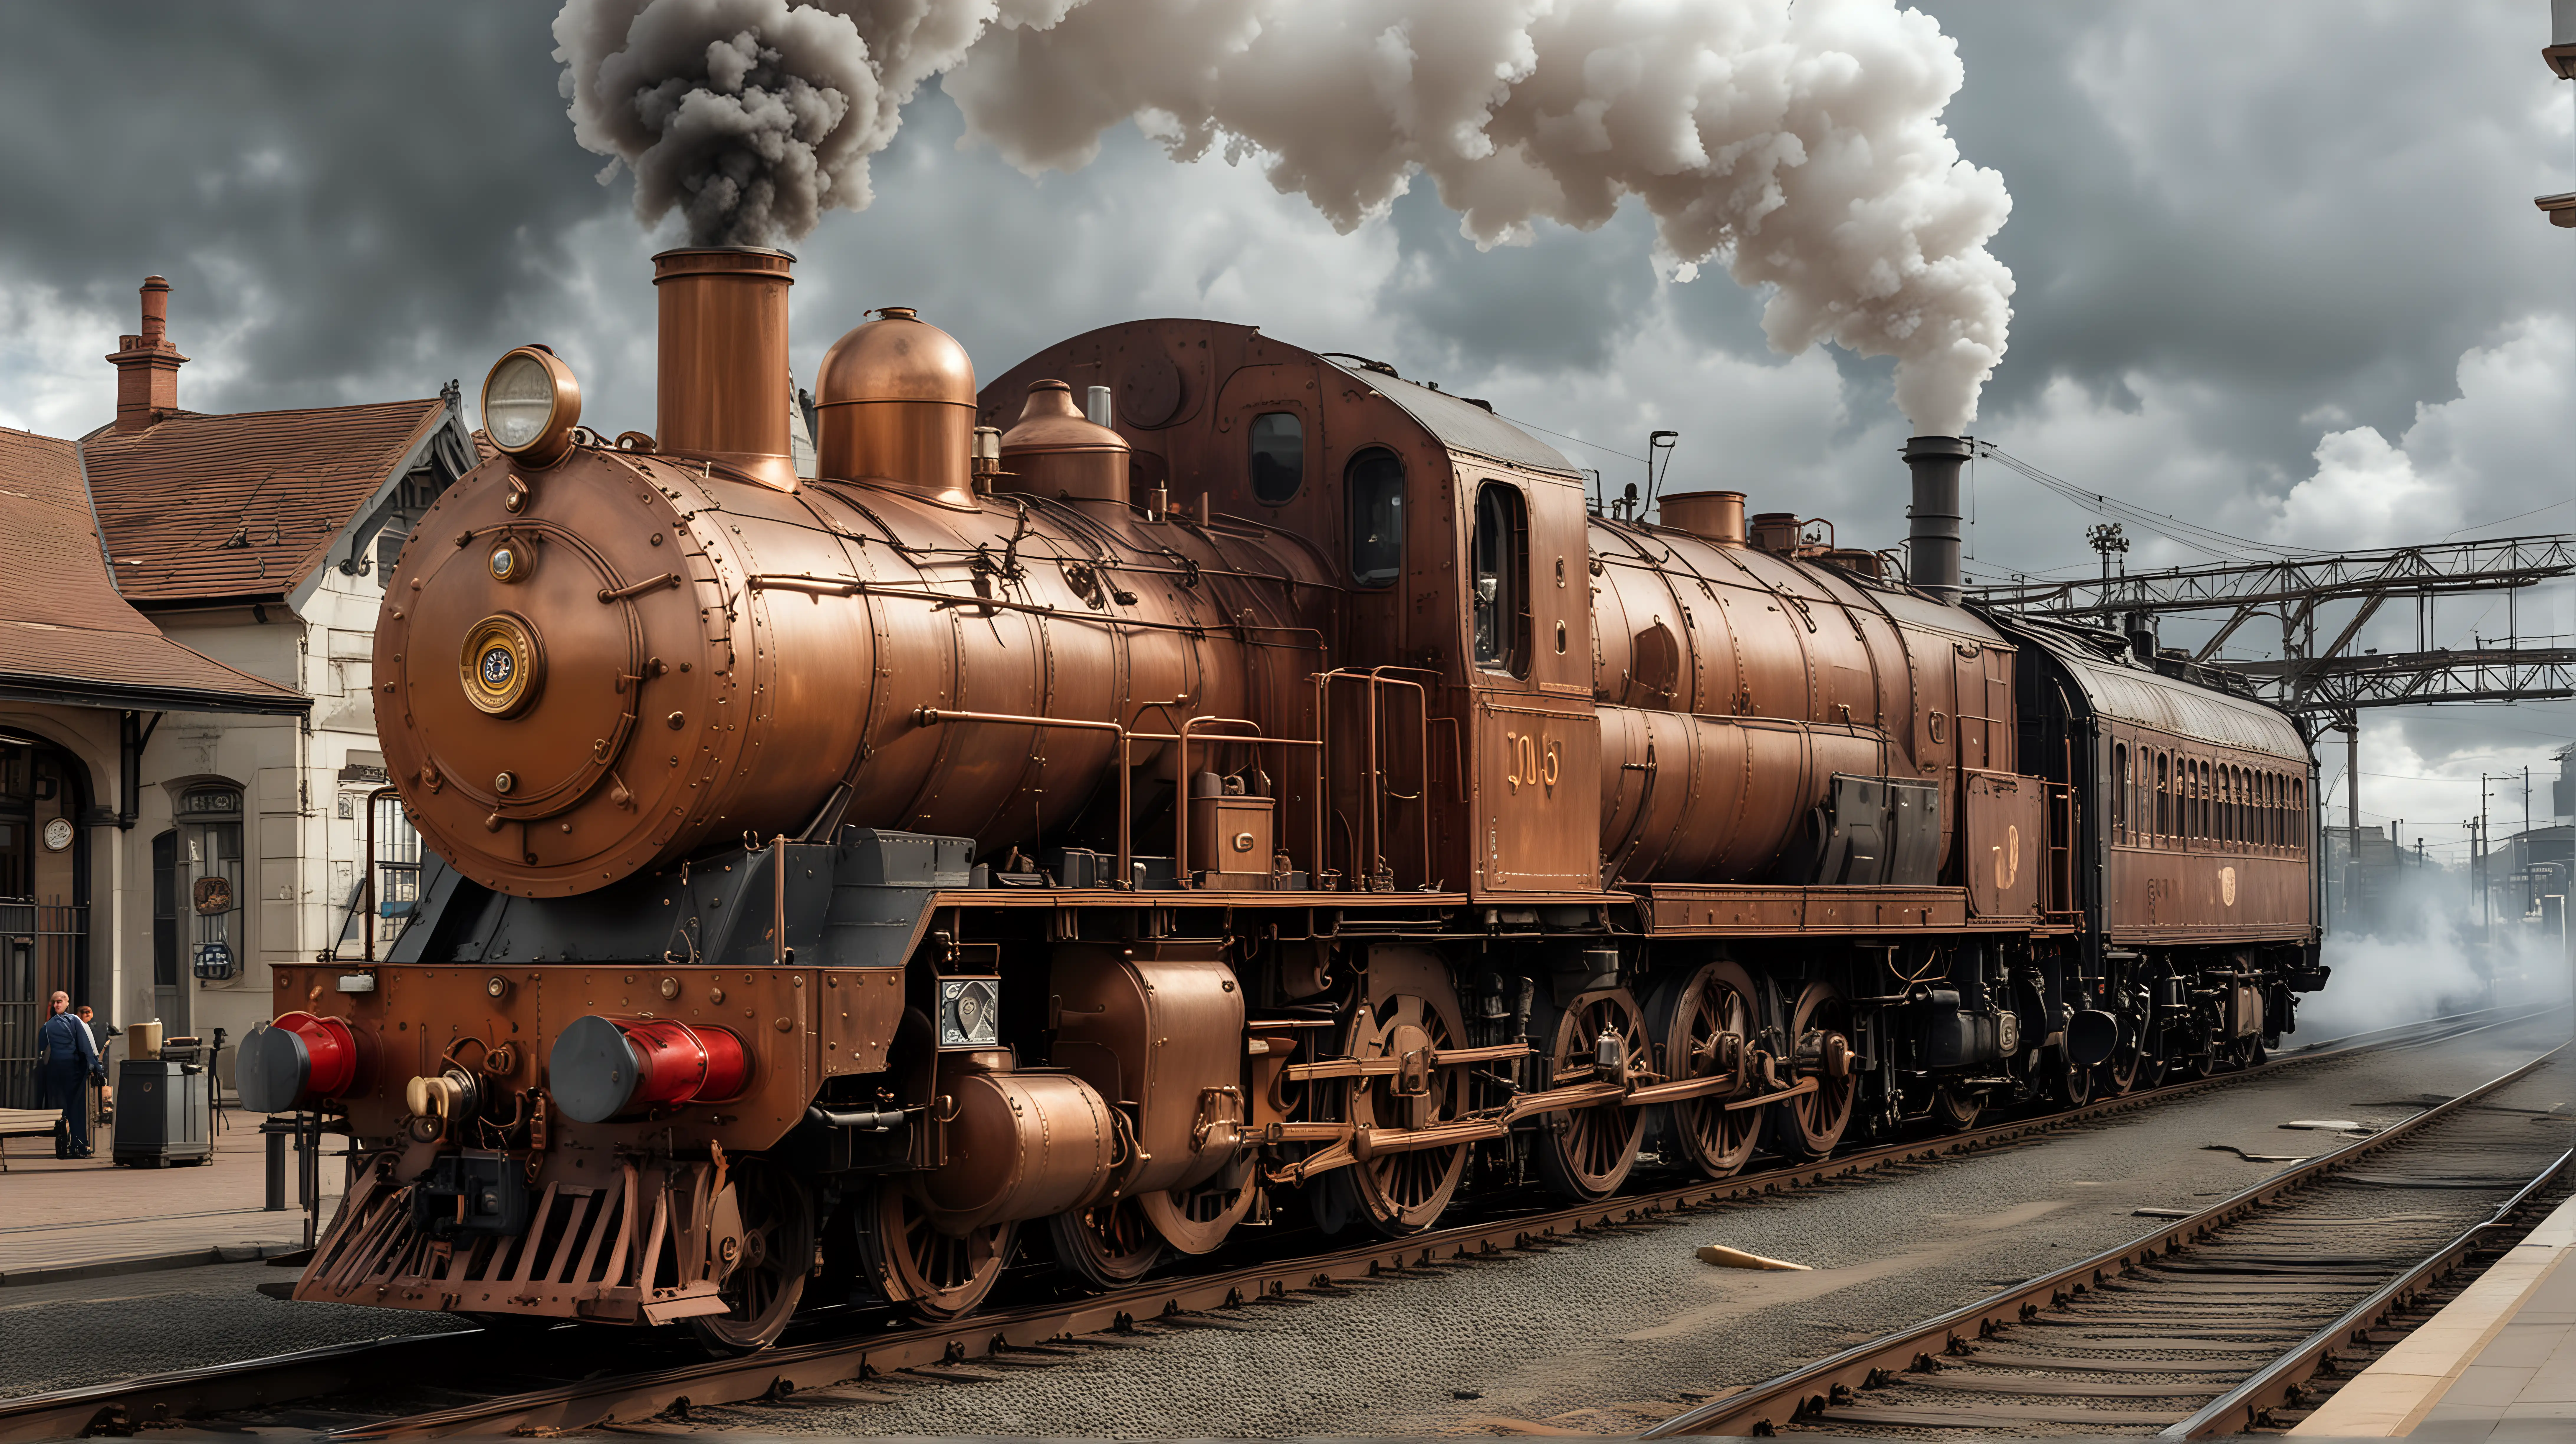 Steampunk Diesel Locomotive at Semaphore Near Cloudy Railway Station